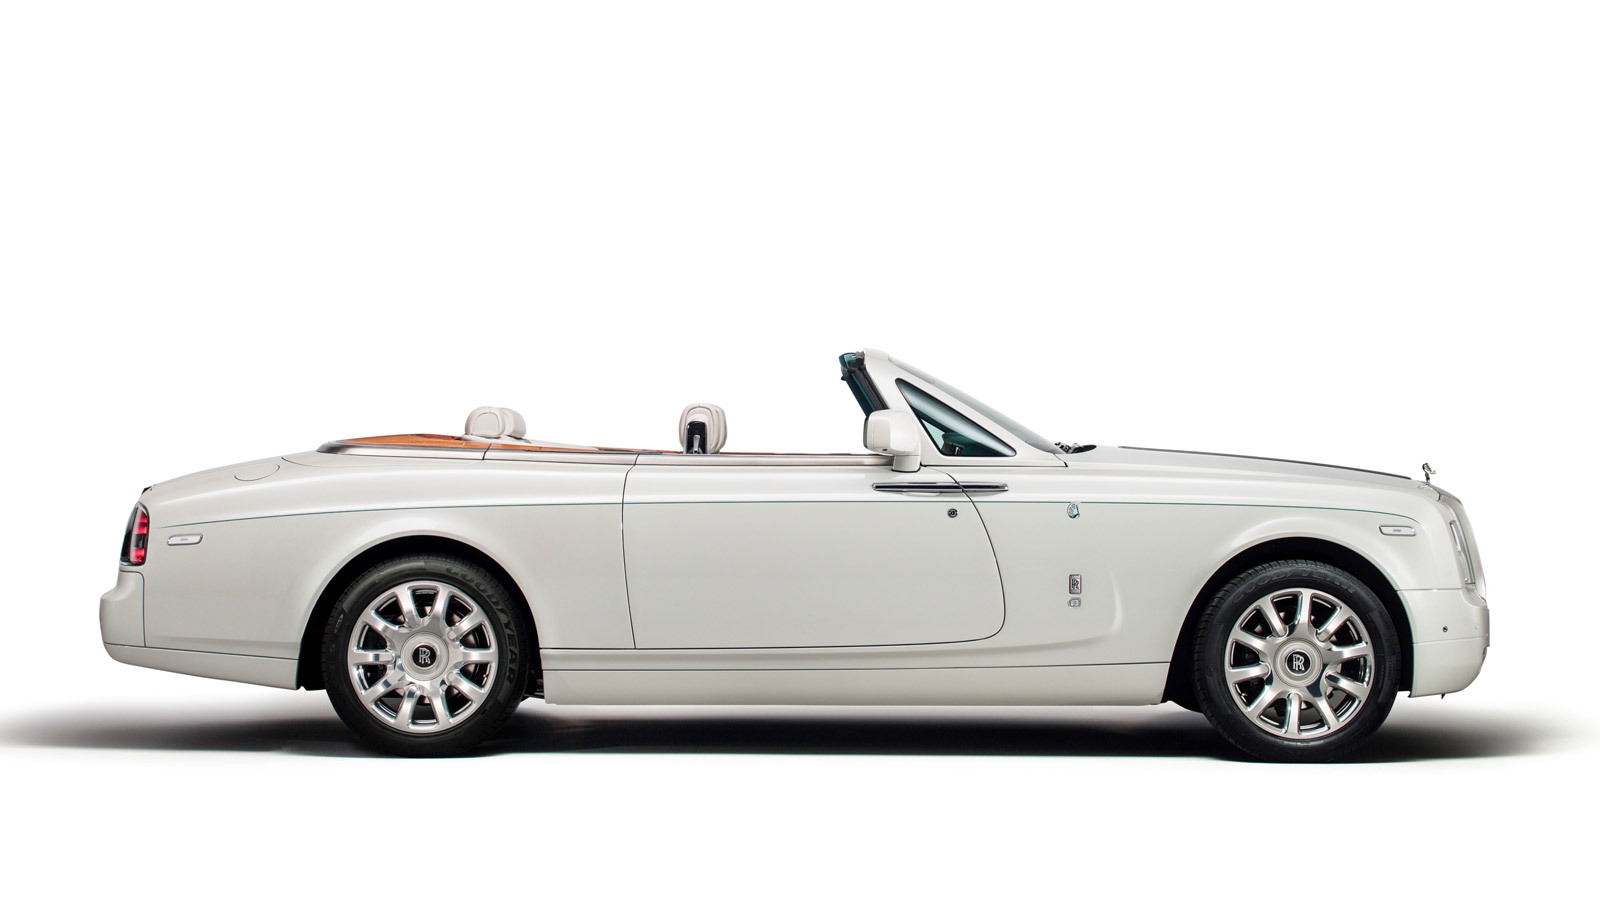 Rolls-Royce Maharaja Phantom Drophead Coupe